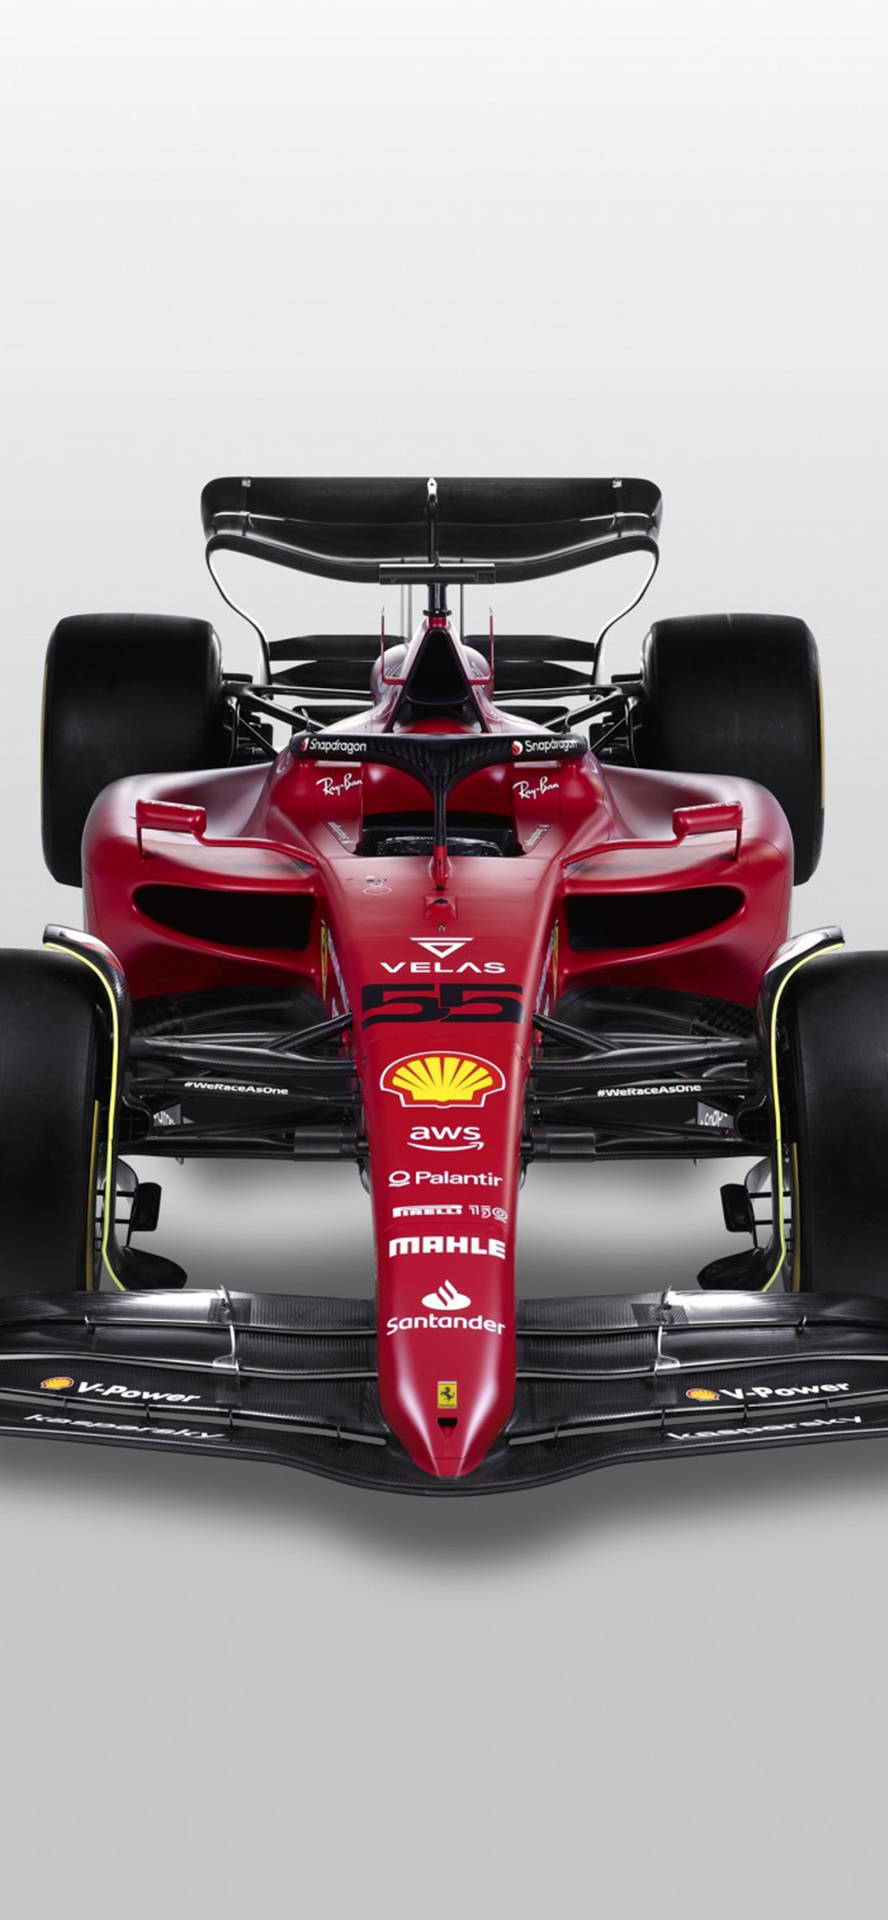 Model Car Ferrari Iphone Wallpaper